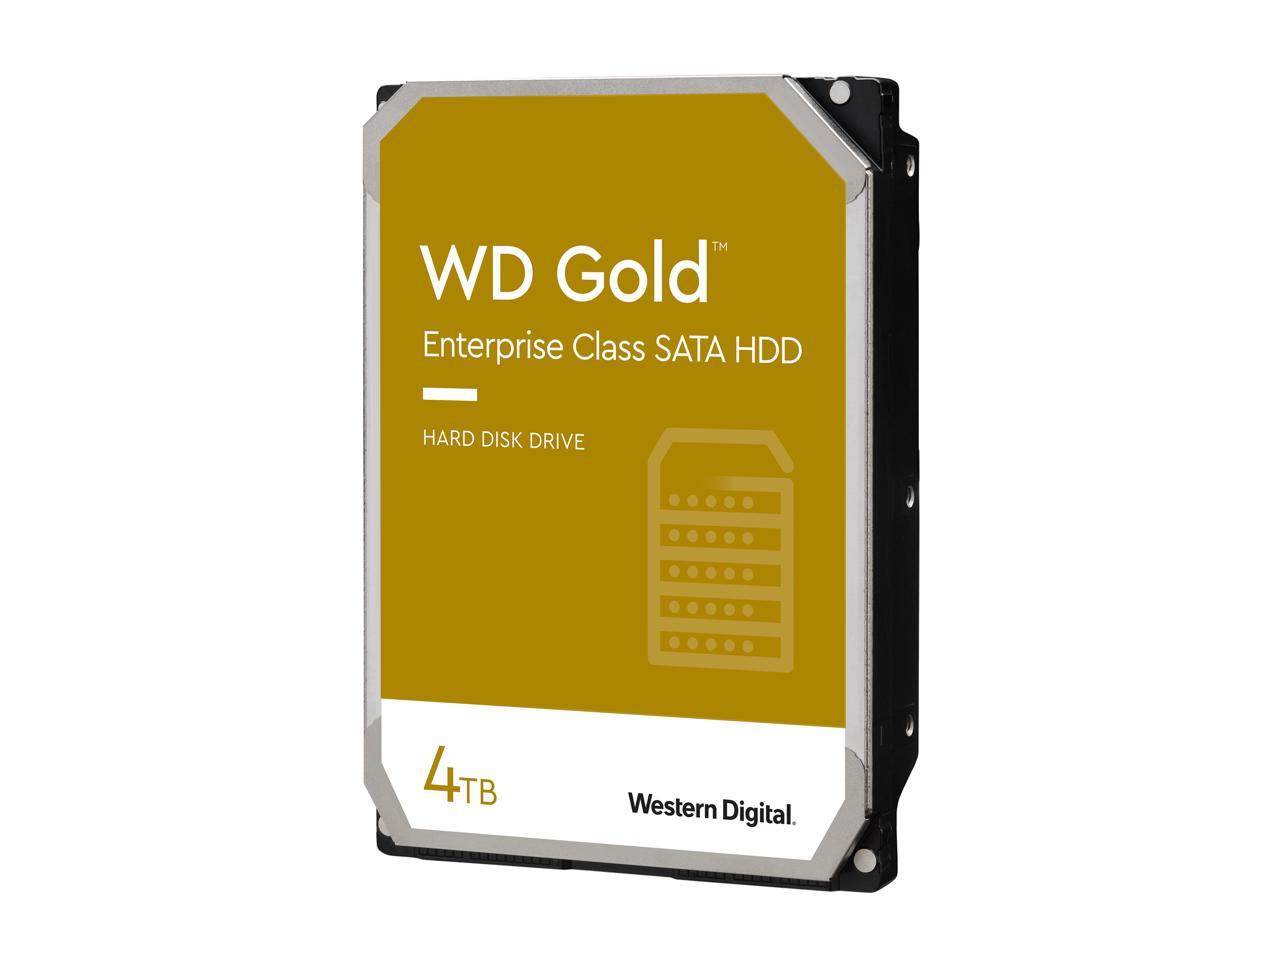 Wd Gold 4Tb Enterprise Class Hard Disk Drive - 7200 Rpm Class Sata 6Gb/S 256Mb Cache 3.5 Inch - Wd4003Fryz